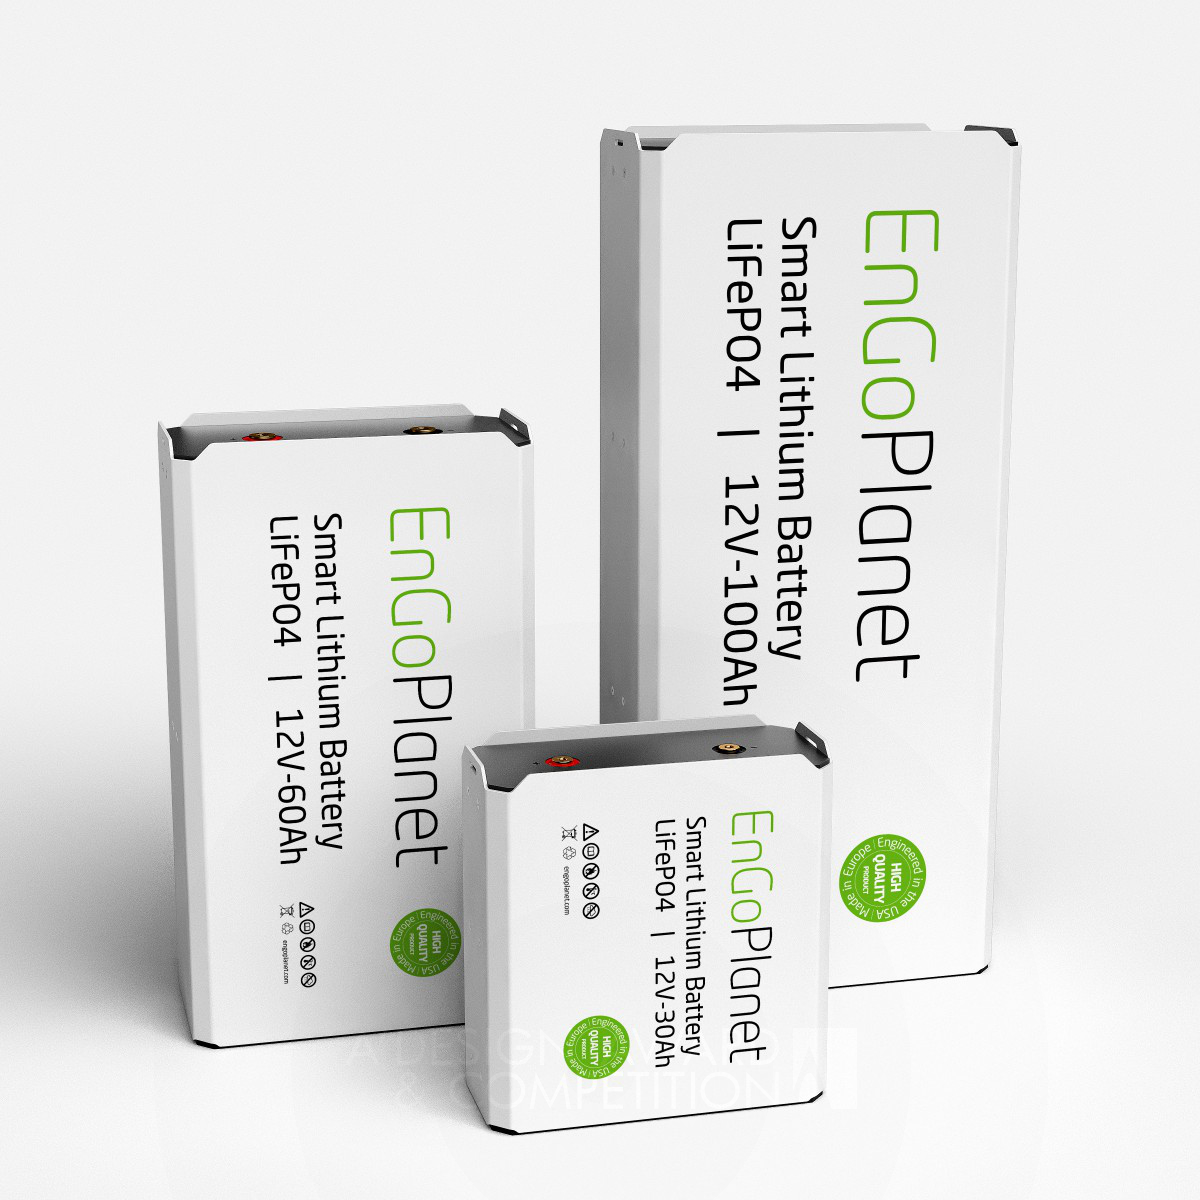 Engo Smart Battery Enclosure